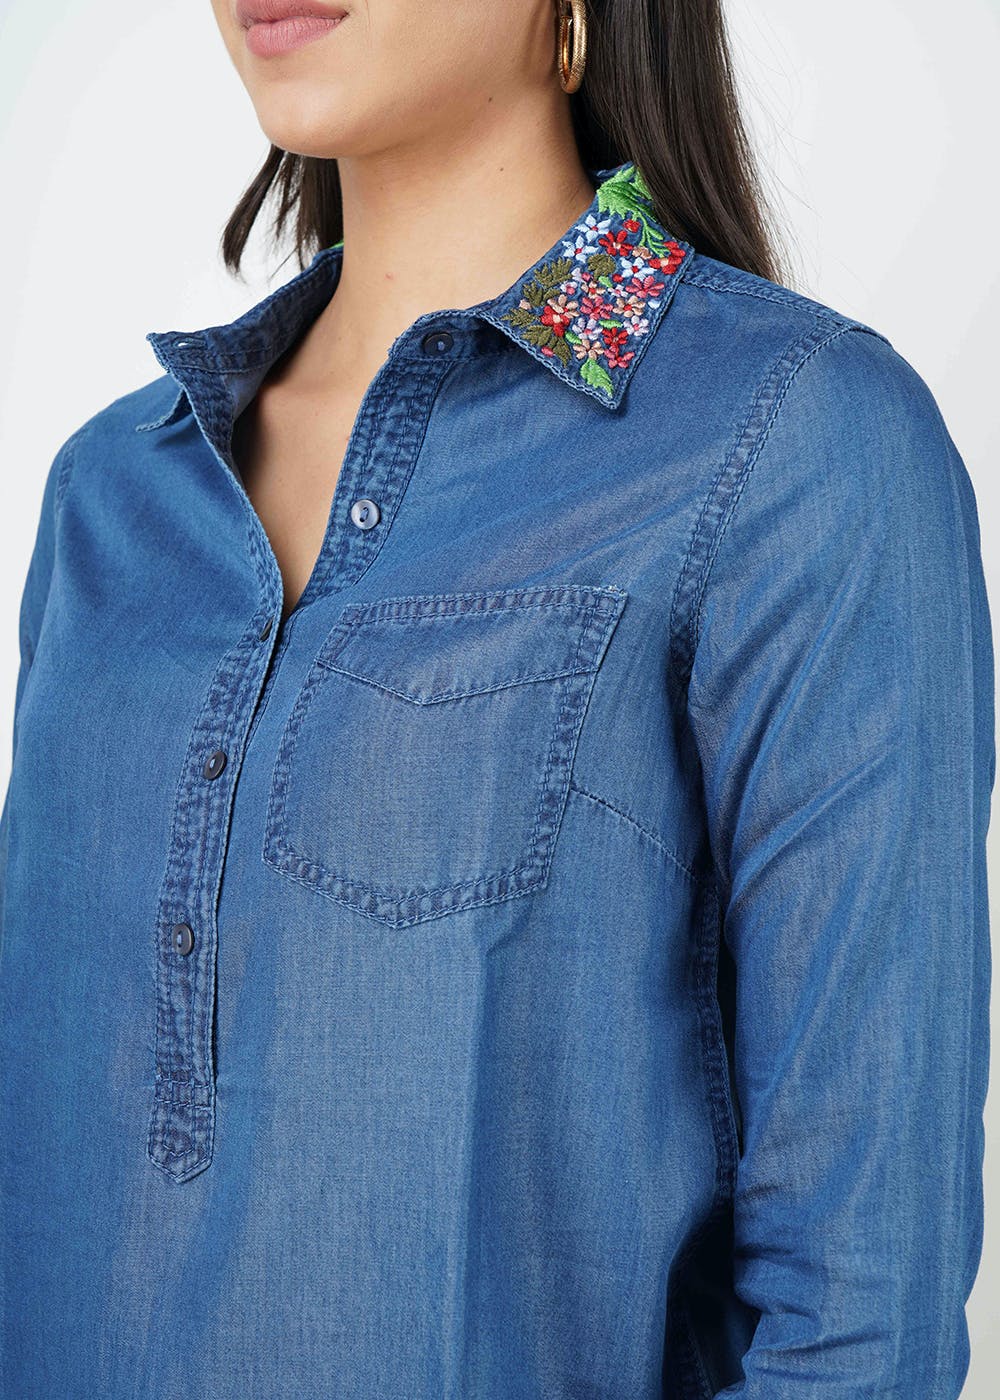 Buy Blue Shirts for Women by AERO JEANS WOMENS Online | Ajio.com